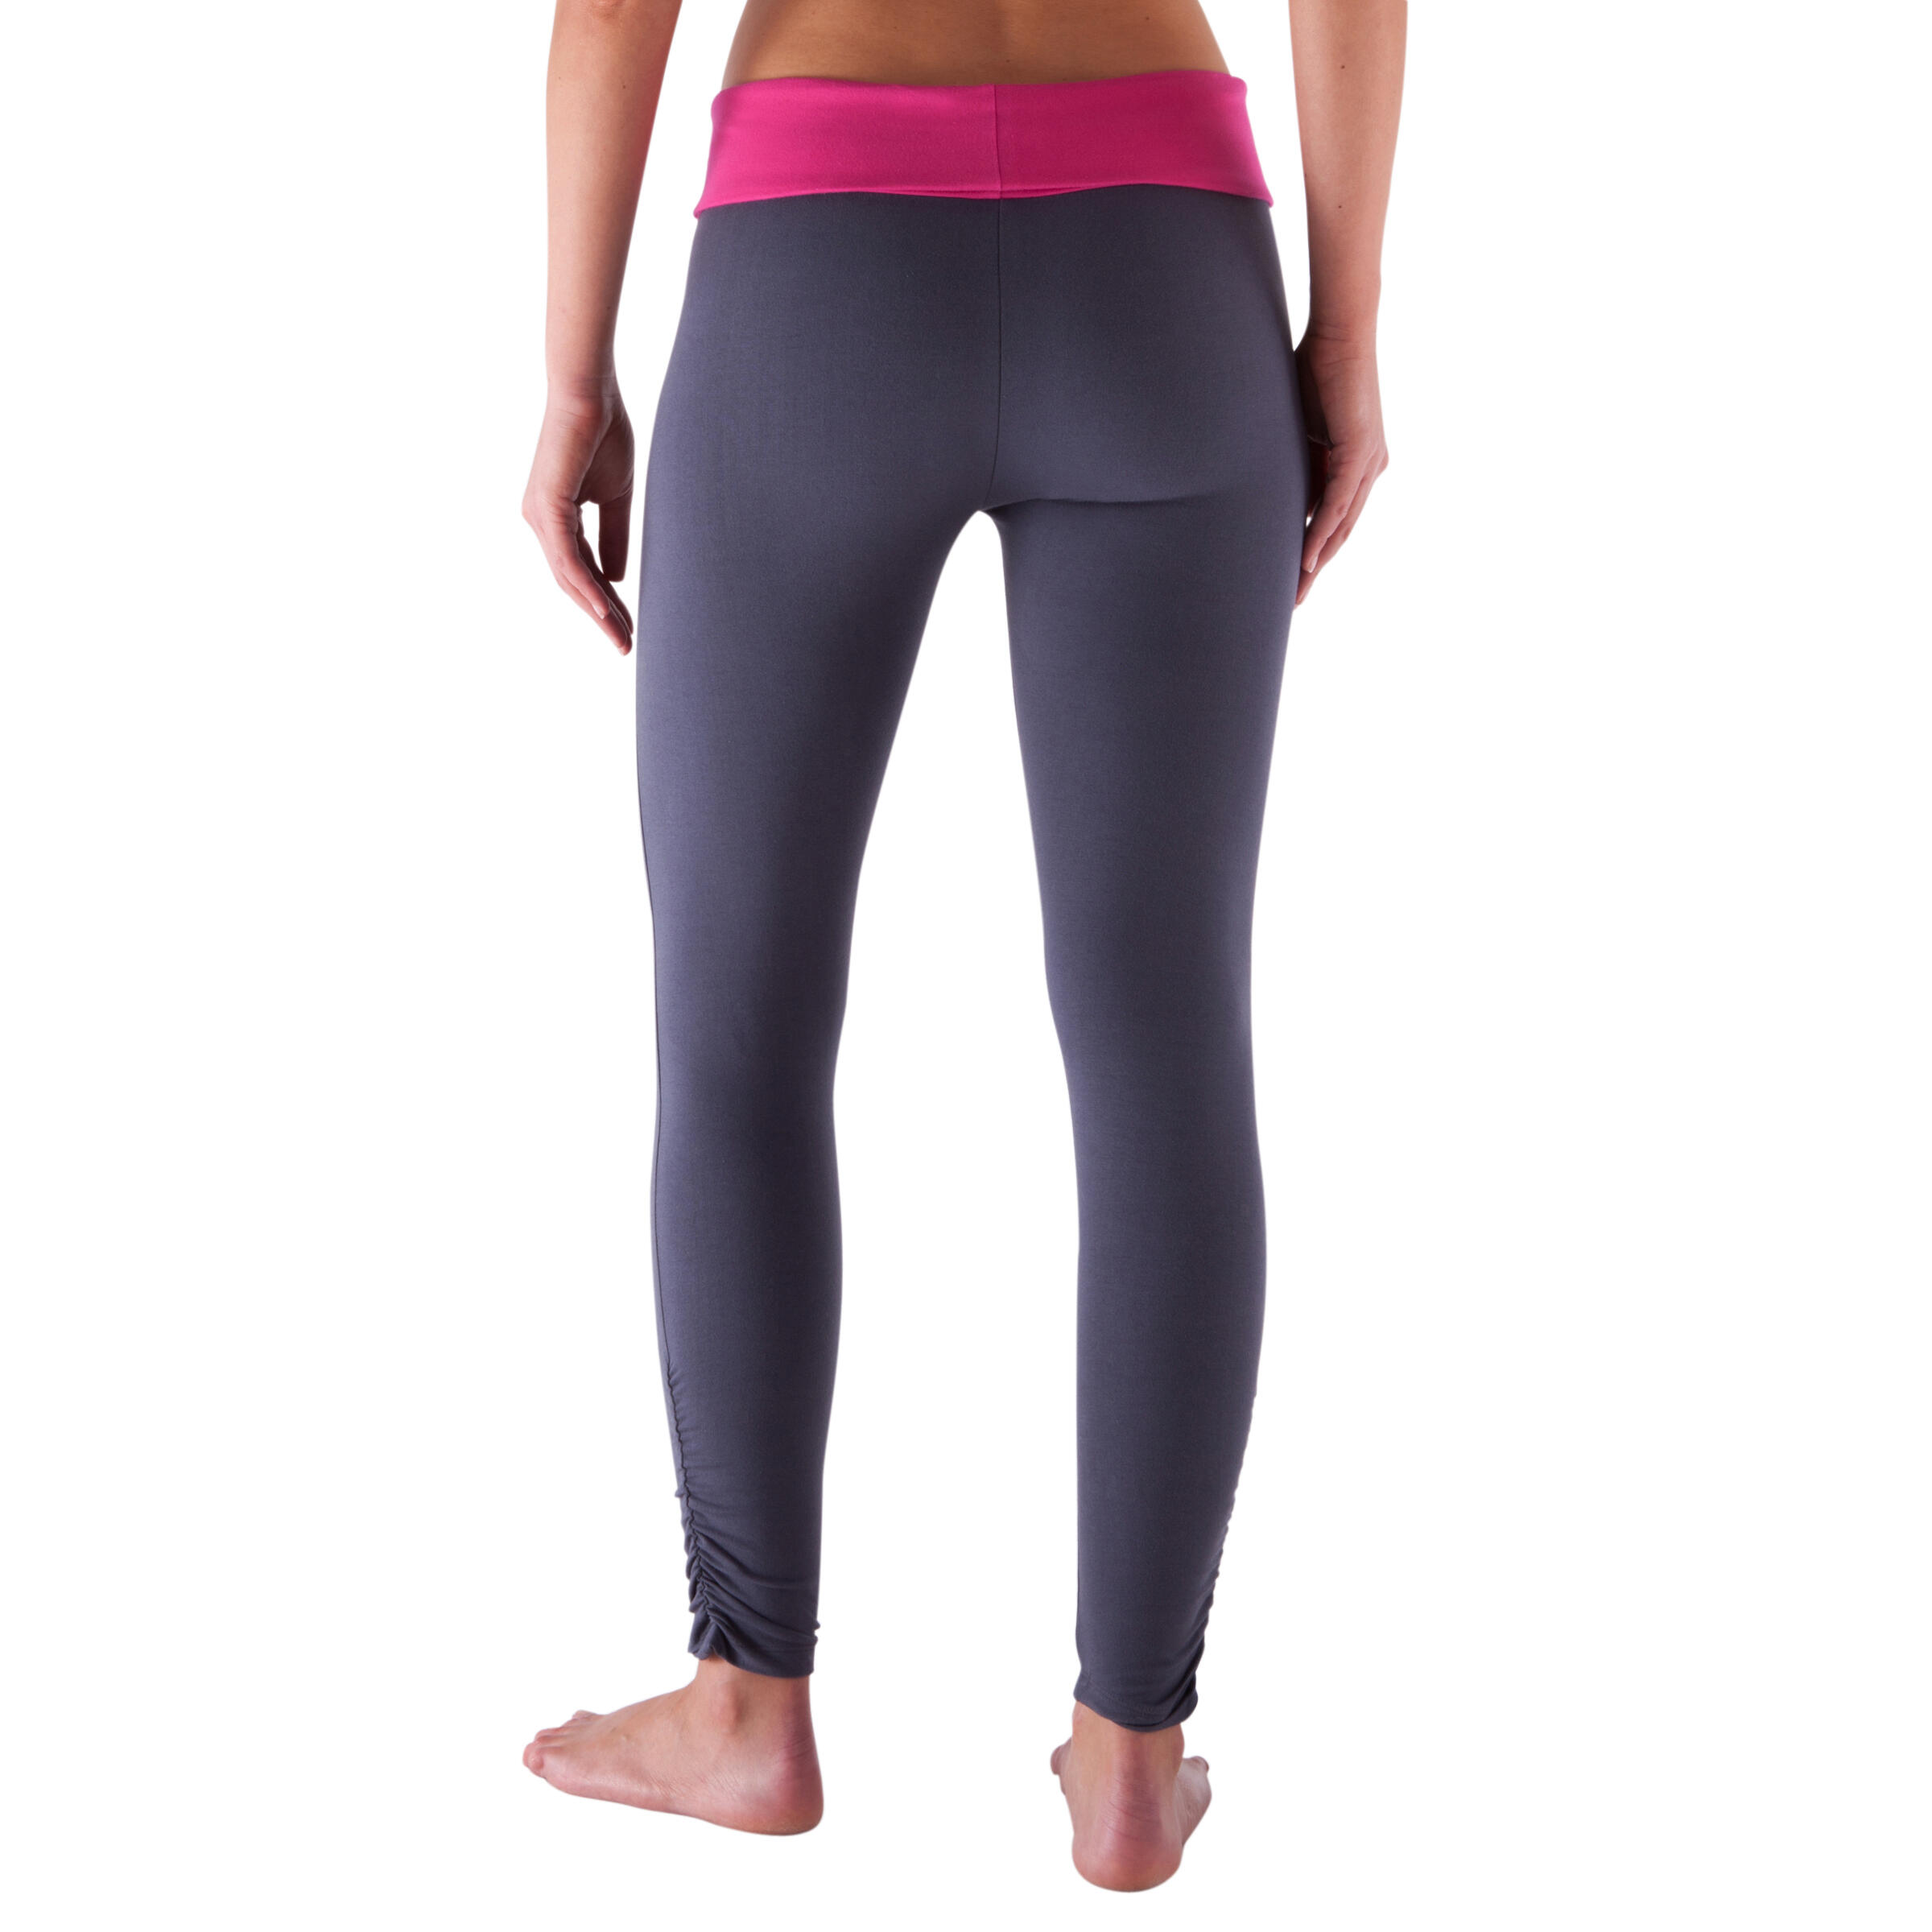 Women's Organic Cotton Yoga Leggings - Dark Grey 4/10